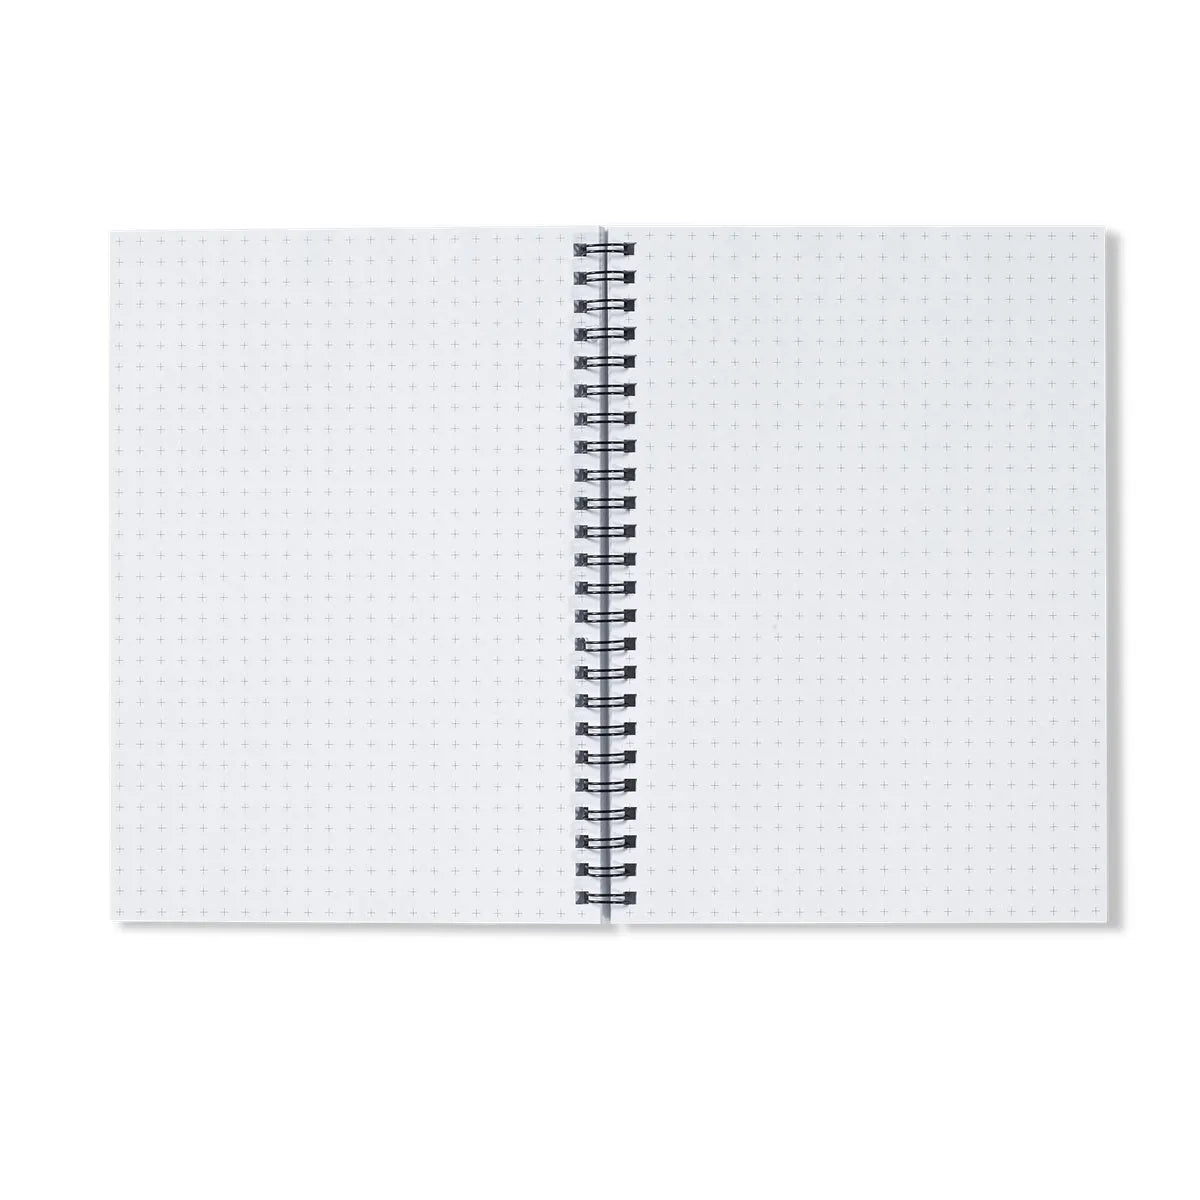 Tangerine Dream Notebook - Notebooks & Notepads - Aesthetic Art